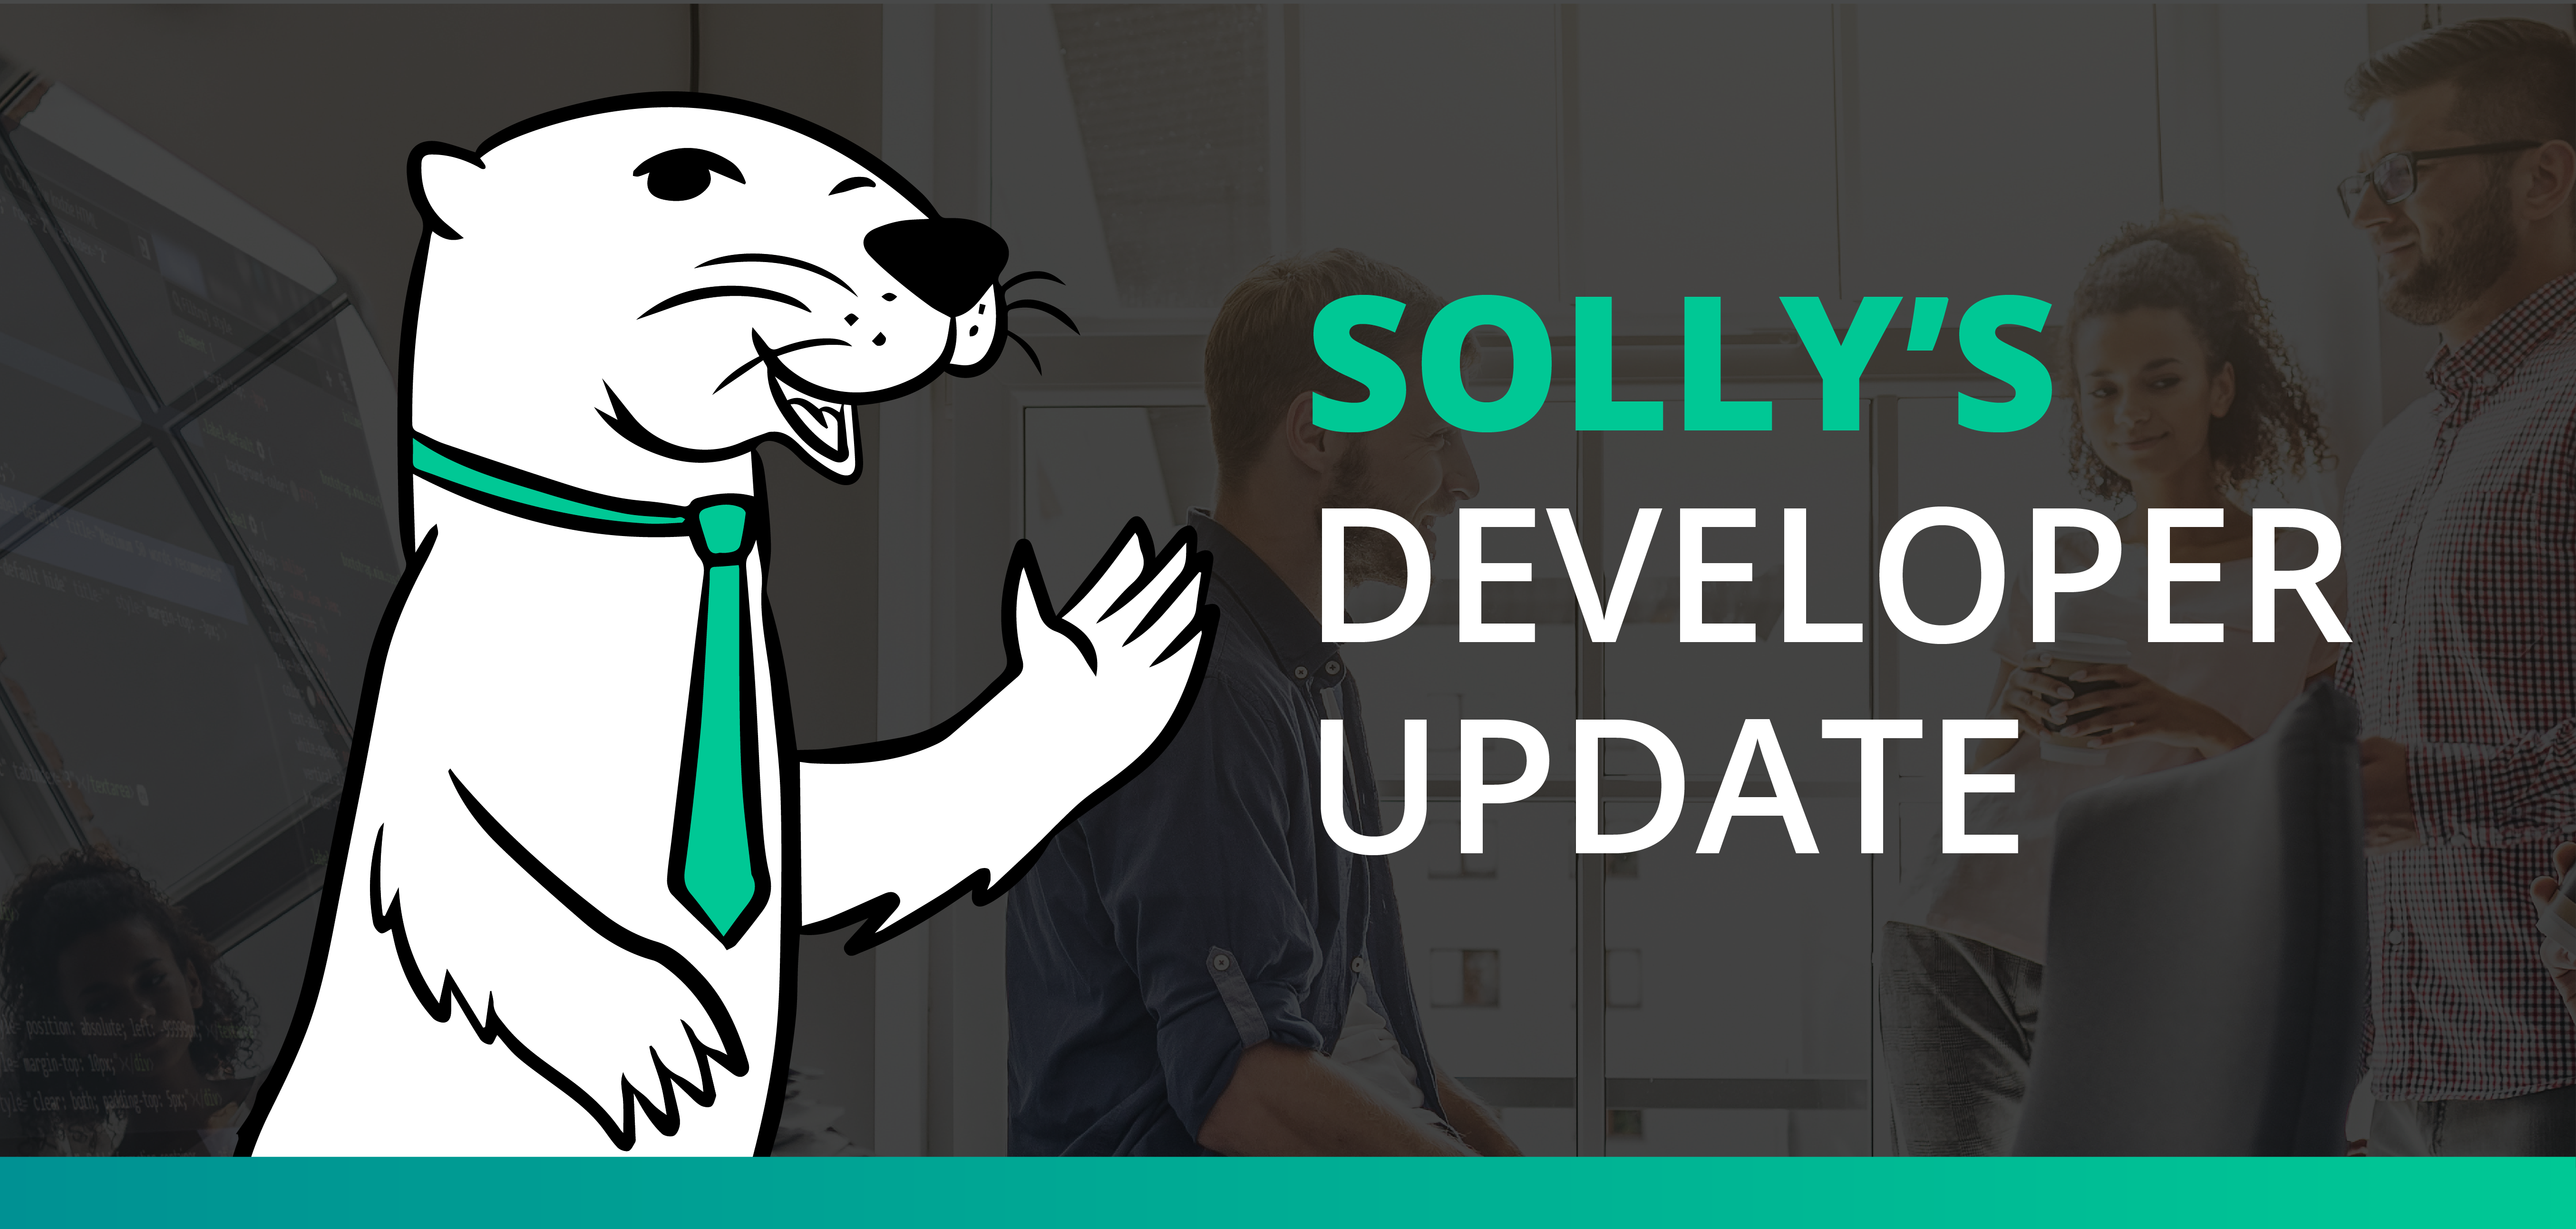 Solly's Developer Update